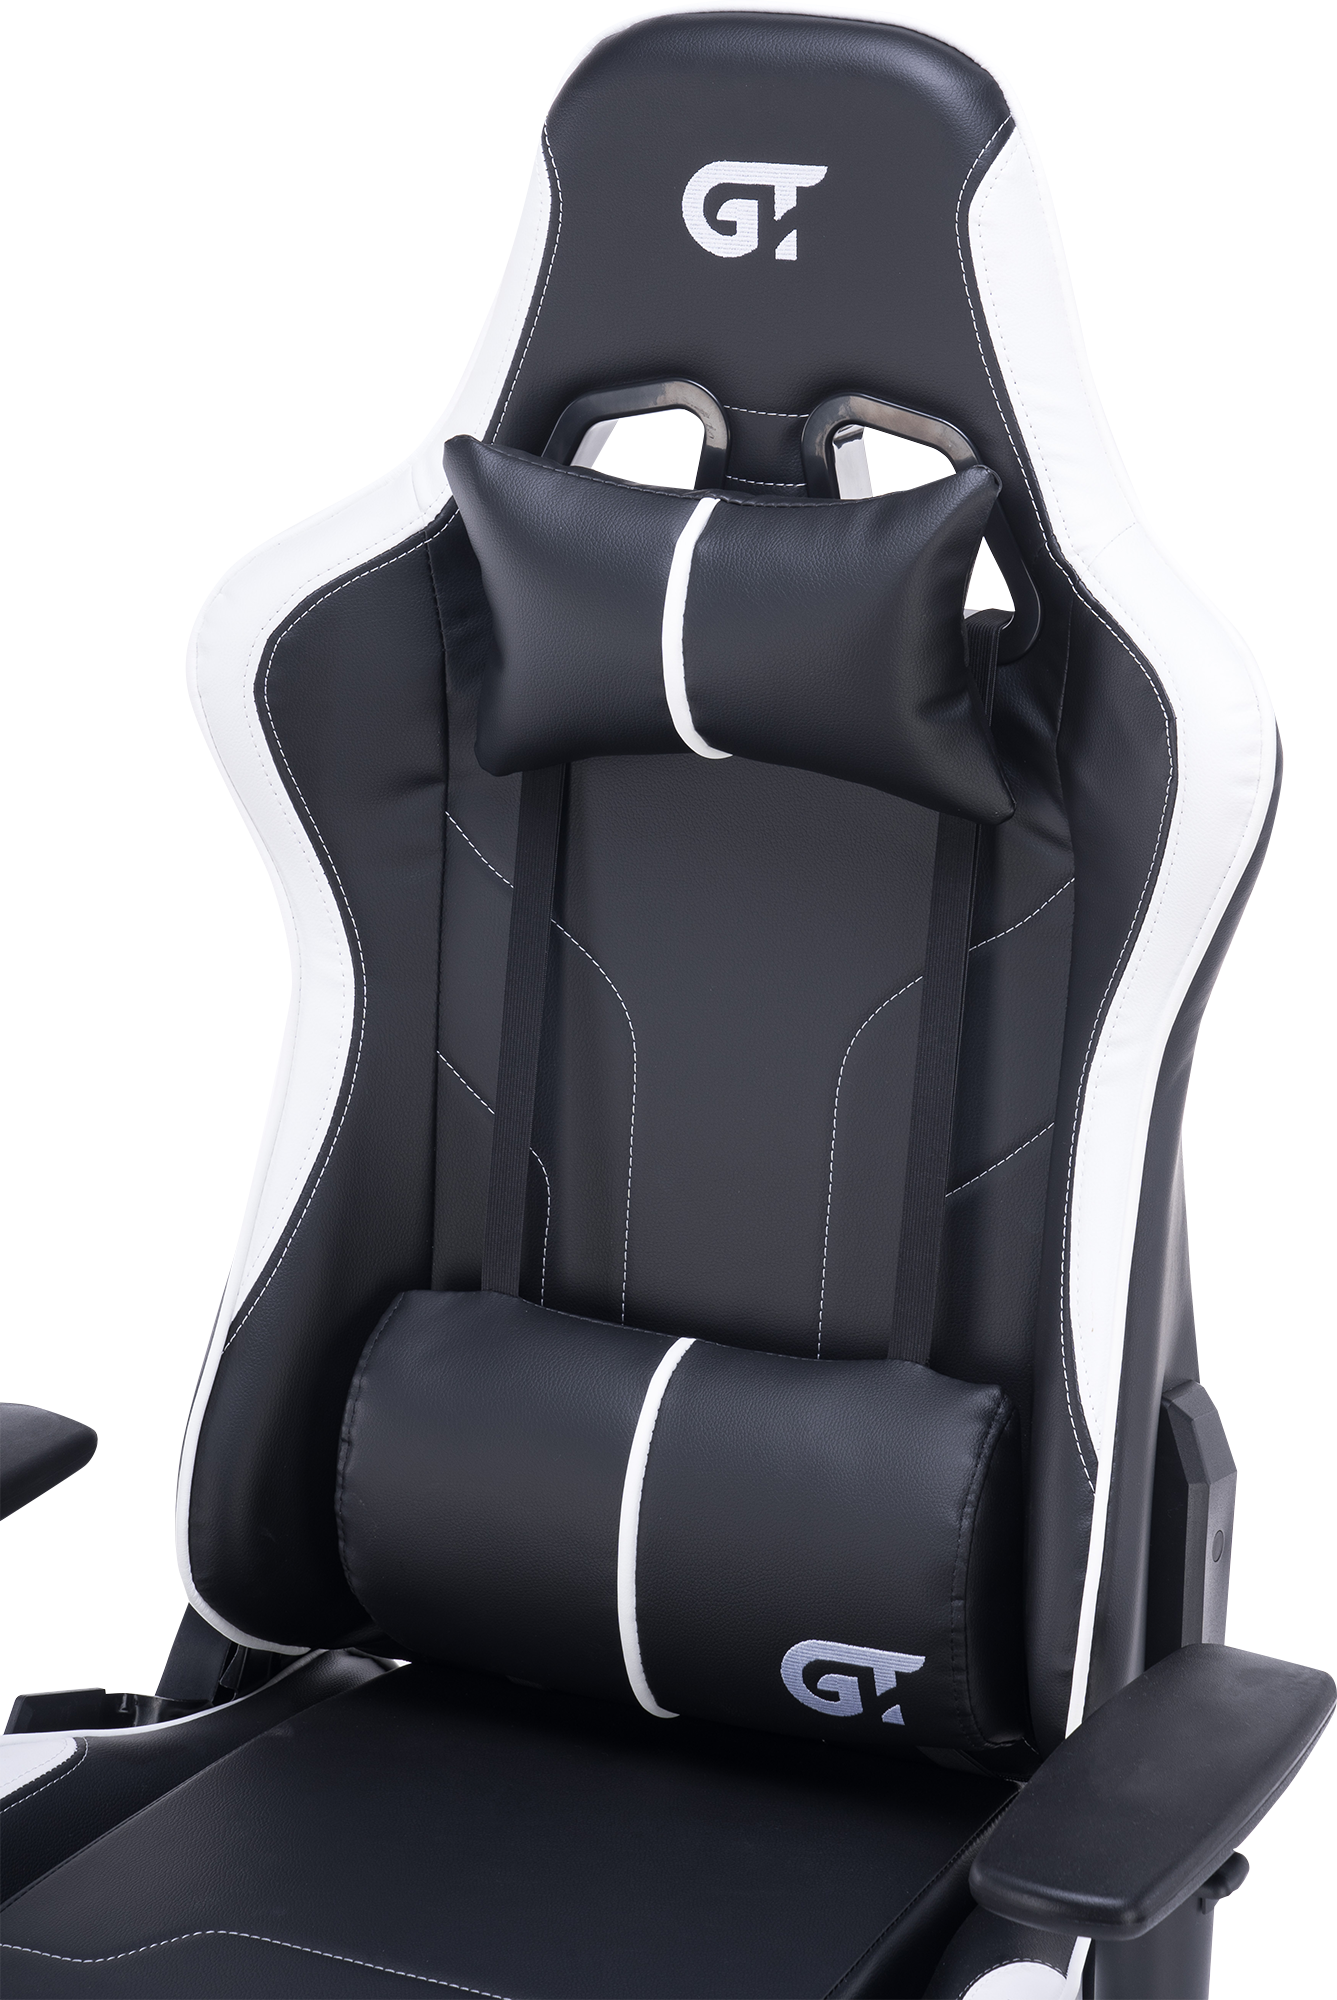 Геймерське крісло GT Racer чорне з білим (X-2528 Black/White) - фото 9